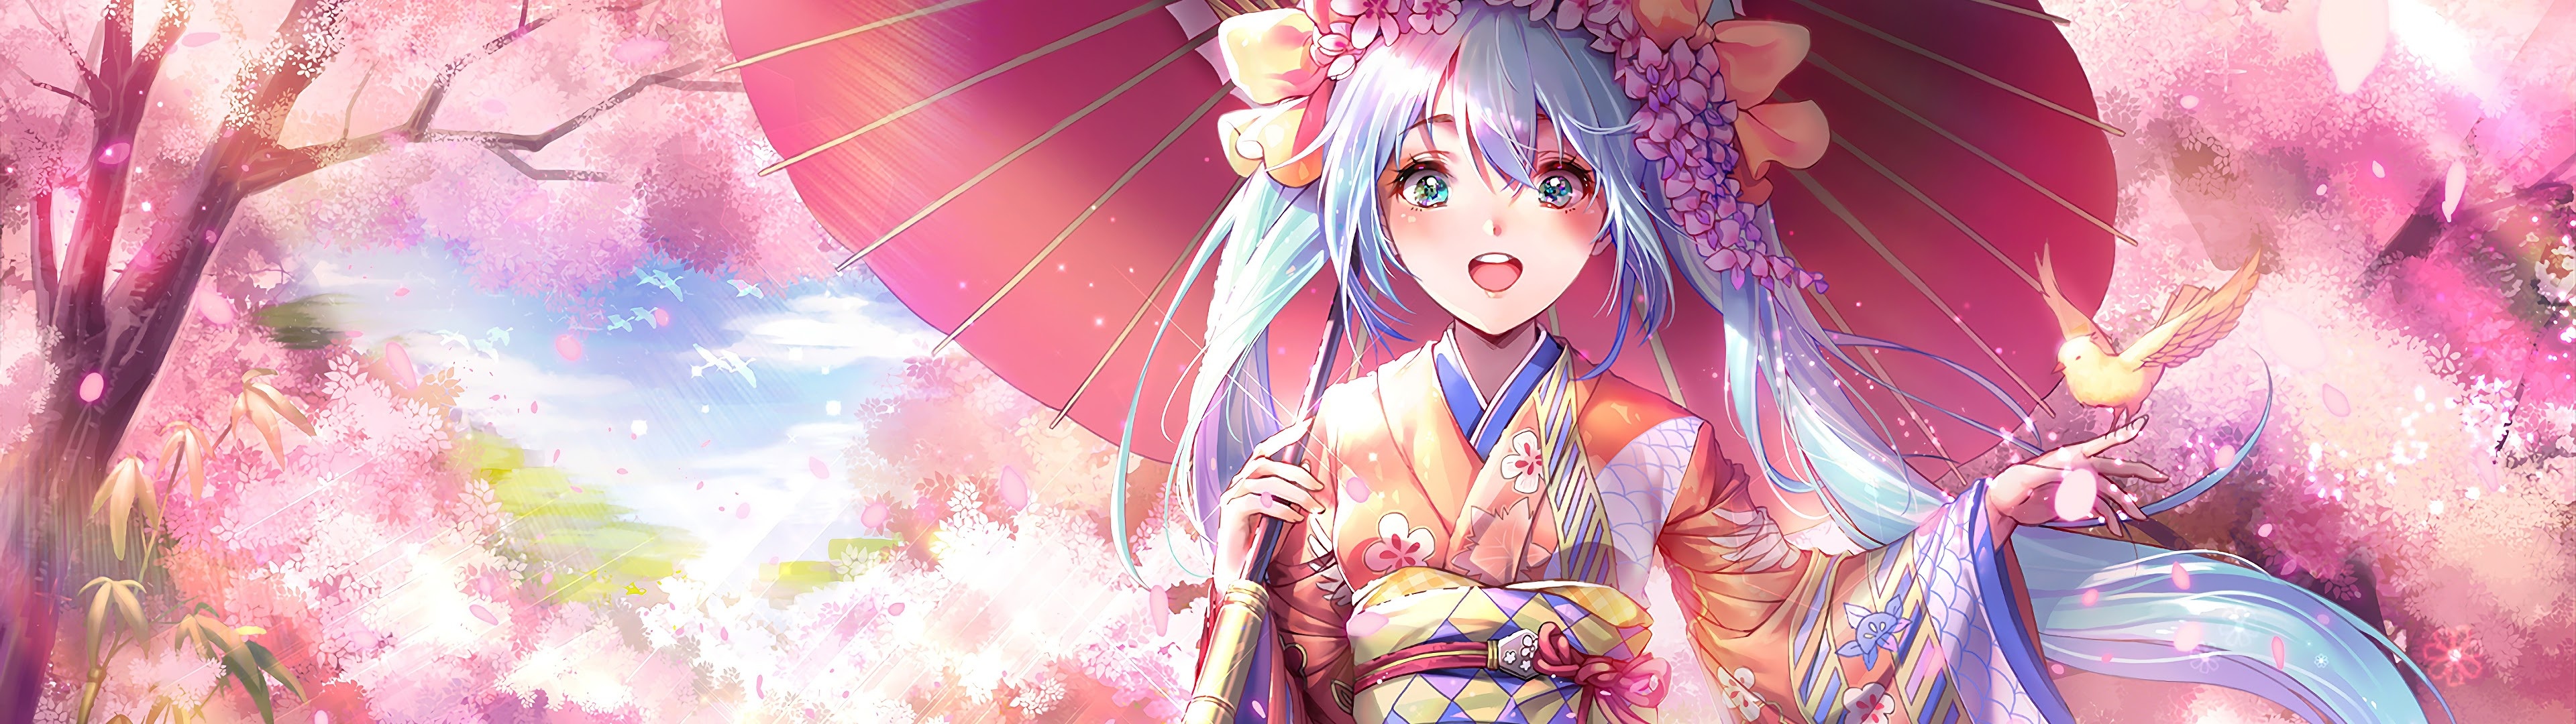 Anime girl kimono, Cherry blossom season, 4K iPhone wallpaper, Stunning visuals, 3840x1080 Dual Screen Desktop